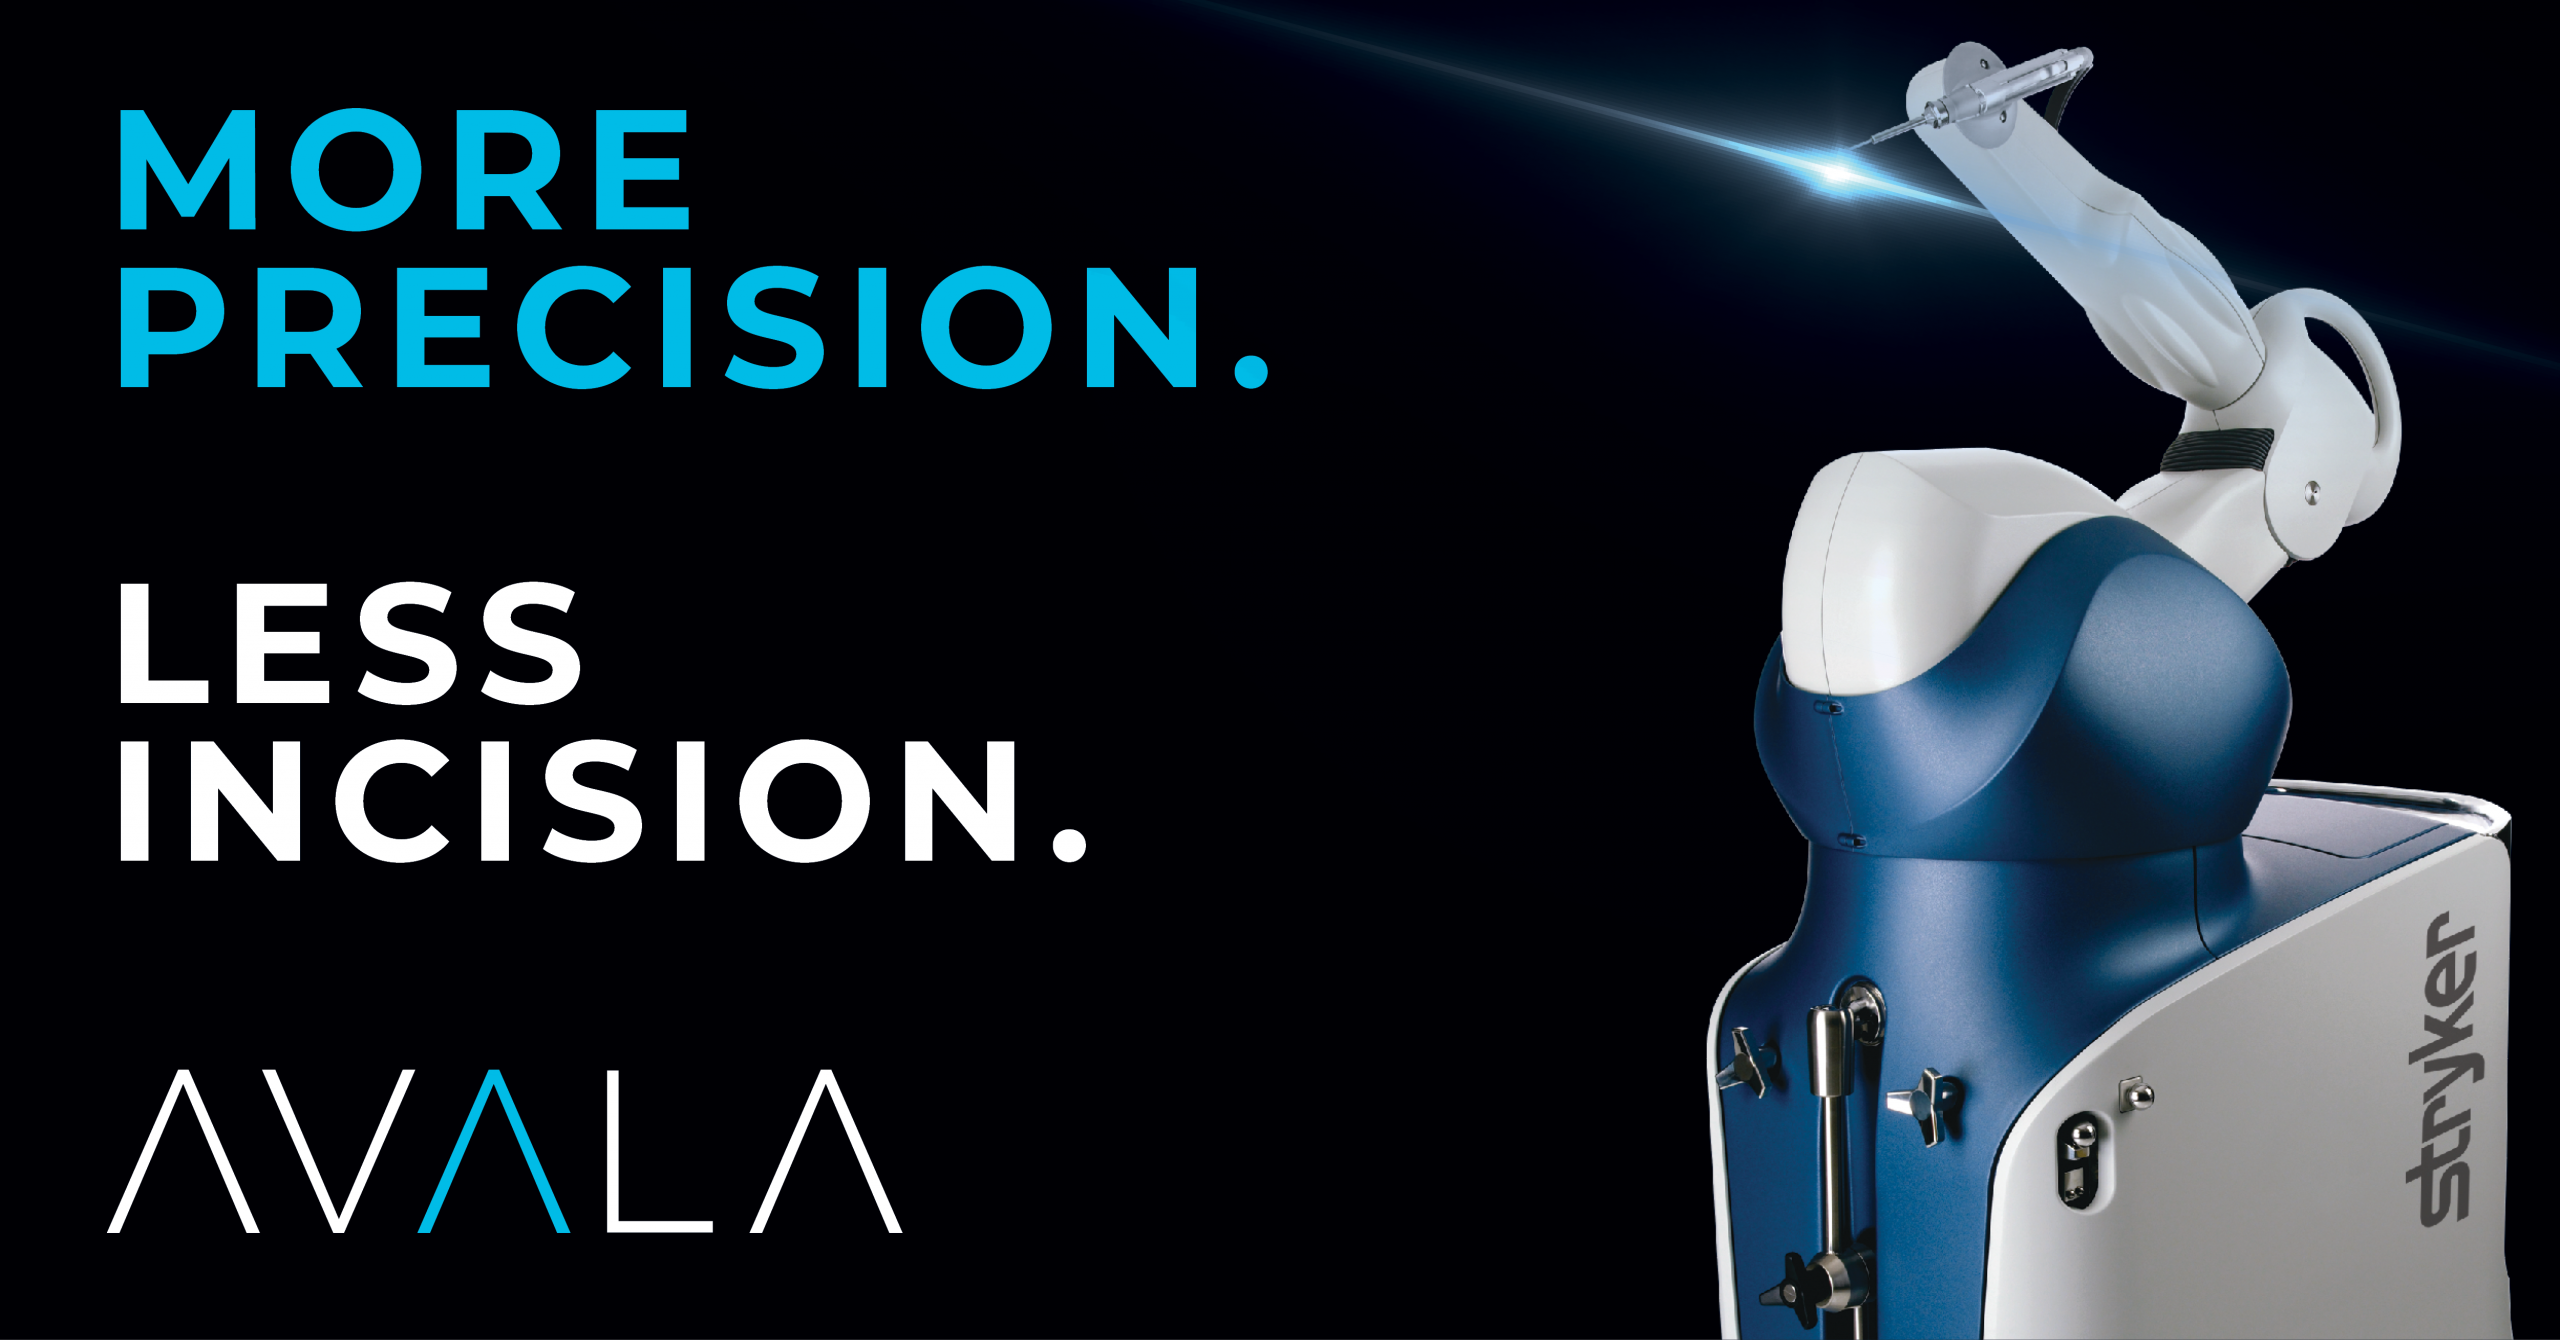 Robots - More Precision Less Incision